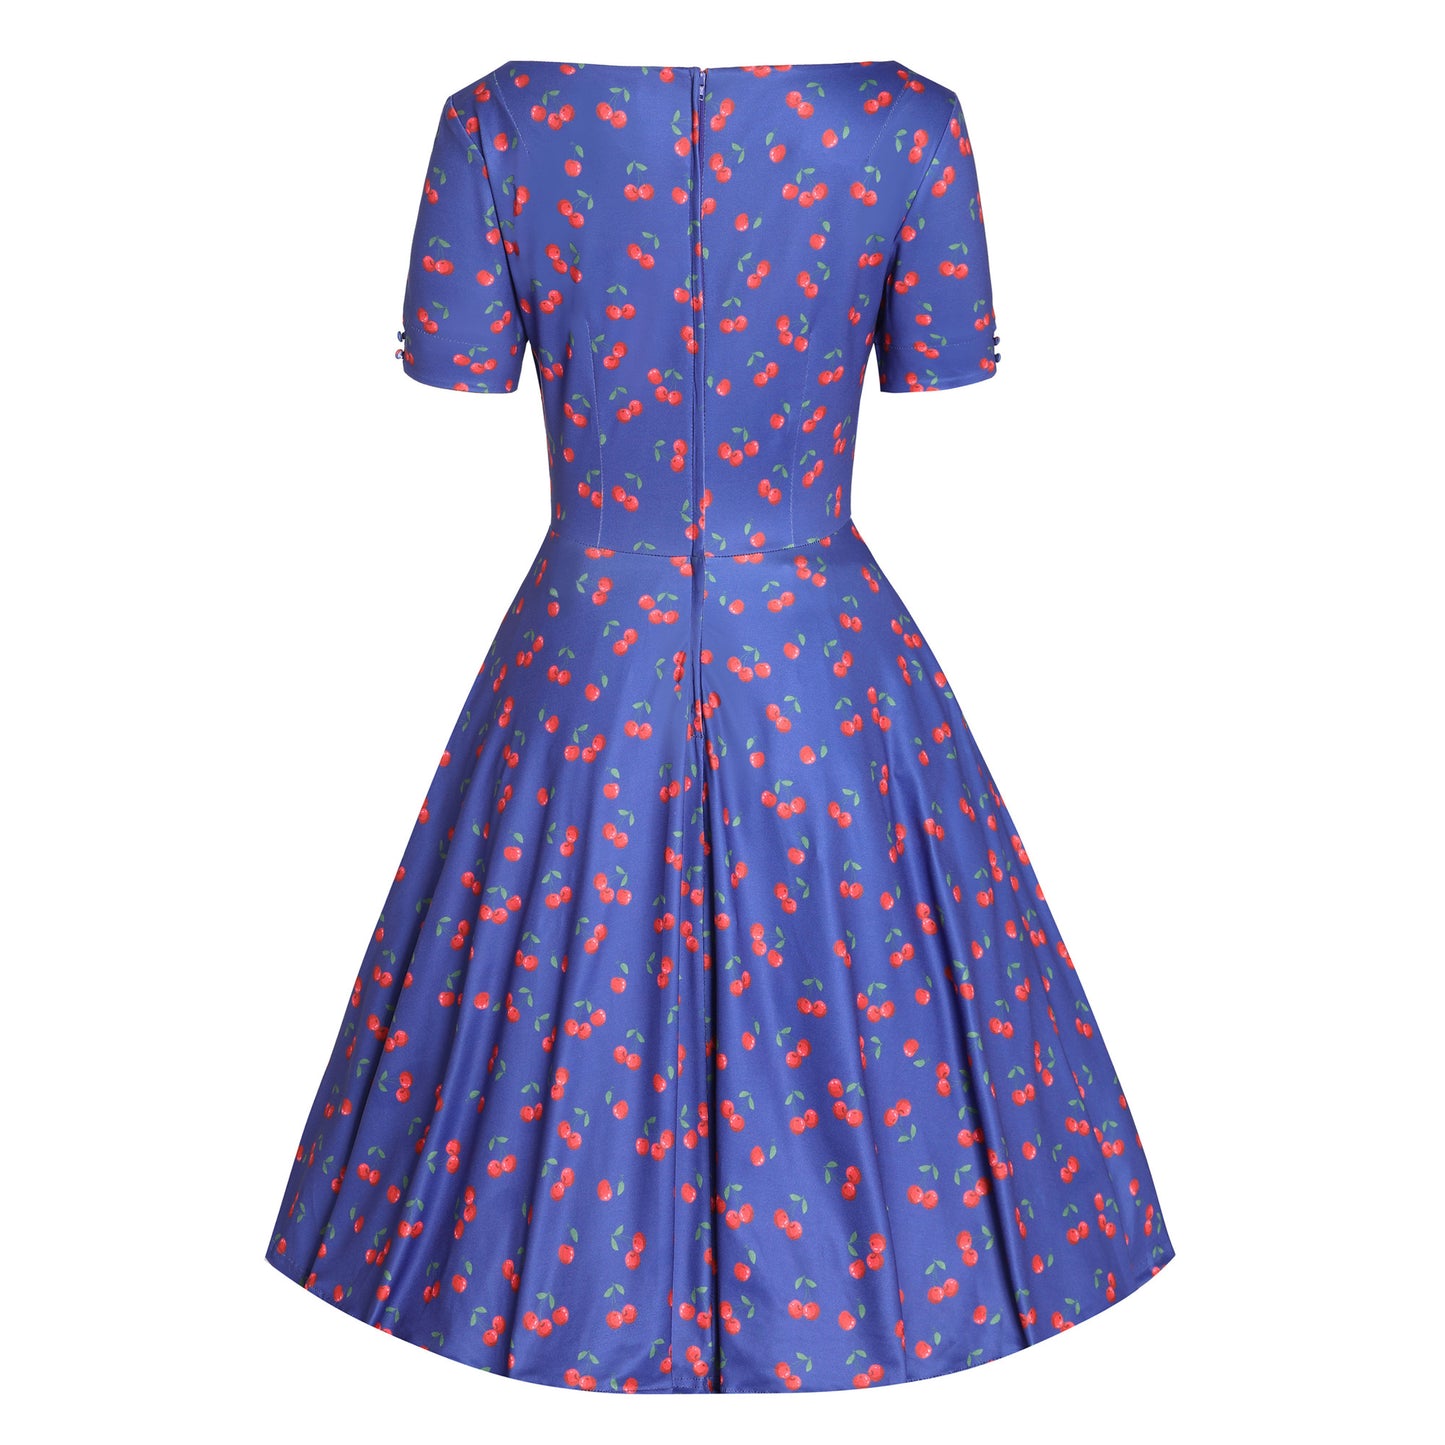 Brenda Blue Cherry Short-Sleeved Dress by Dolly & Dotty